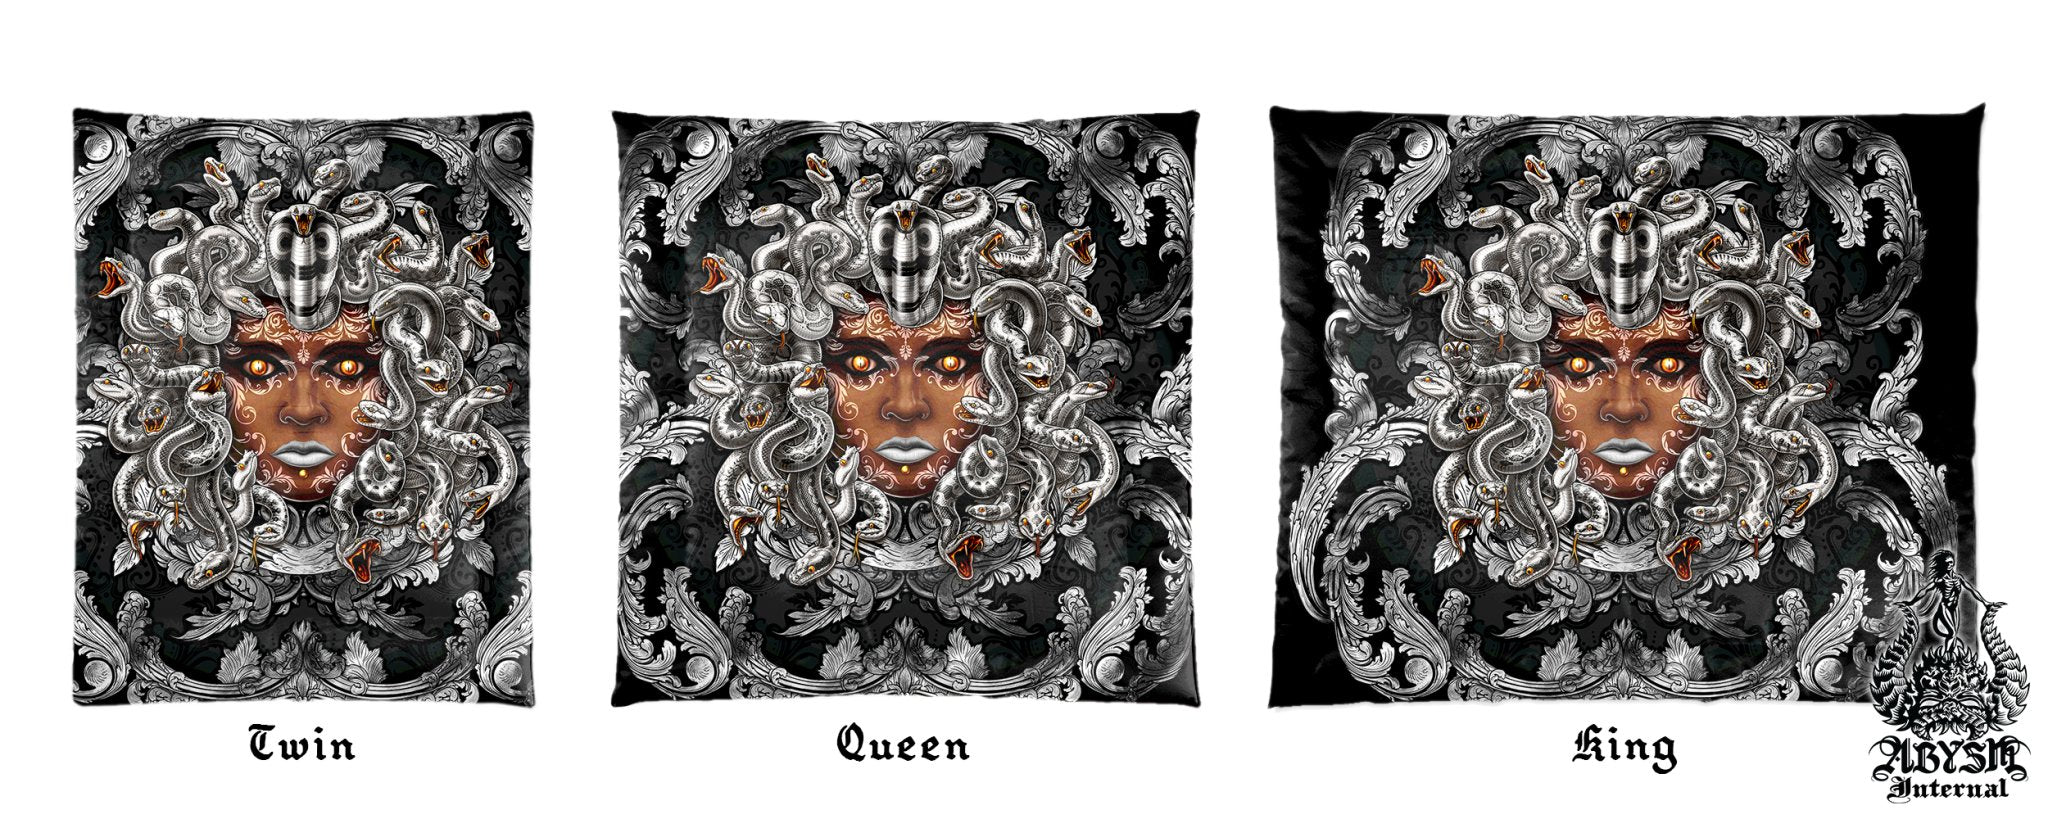 Skull Duvet Cover, Bed Covering, Skull Art, Victorian Goth Comforter, Bedroom Decor, King, Queen & Twin Bedding Set - Silver Medusa, 2 Faces - Abysm Internal